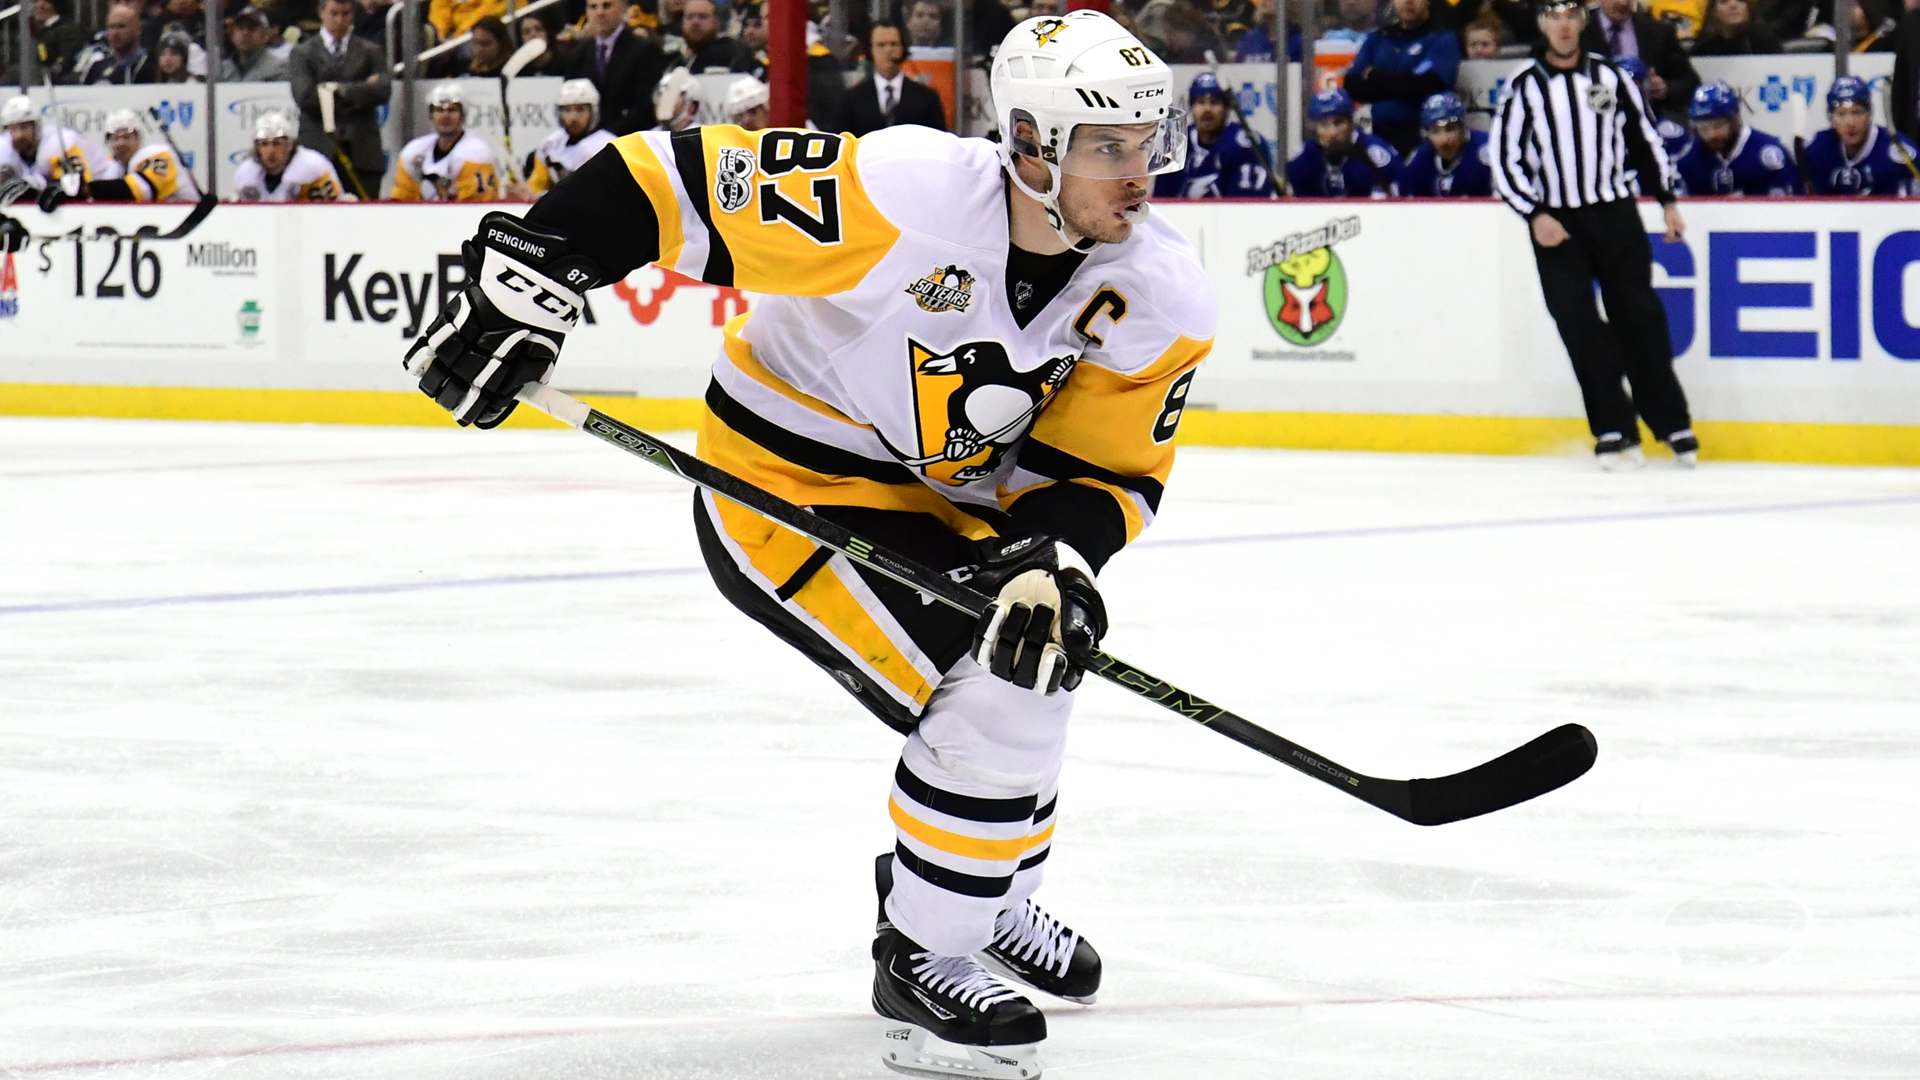 Crosby stars for Penguins, Granlund scores hat-trick